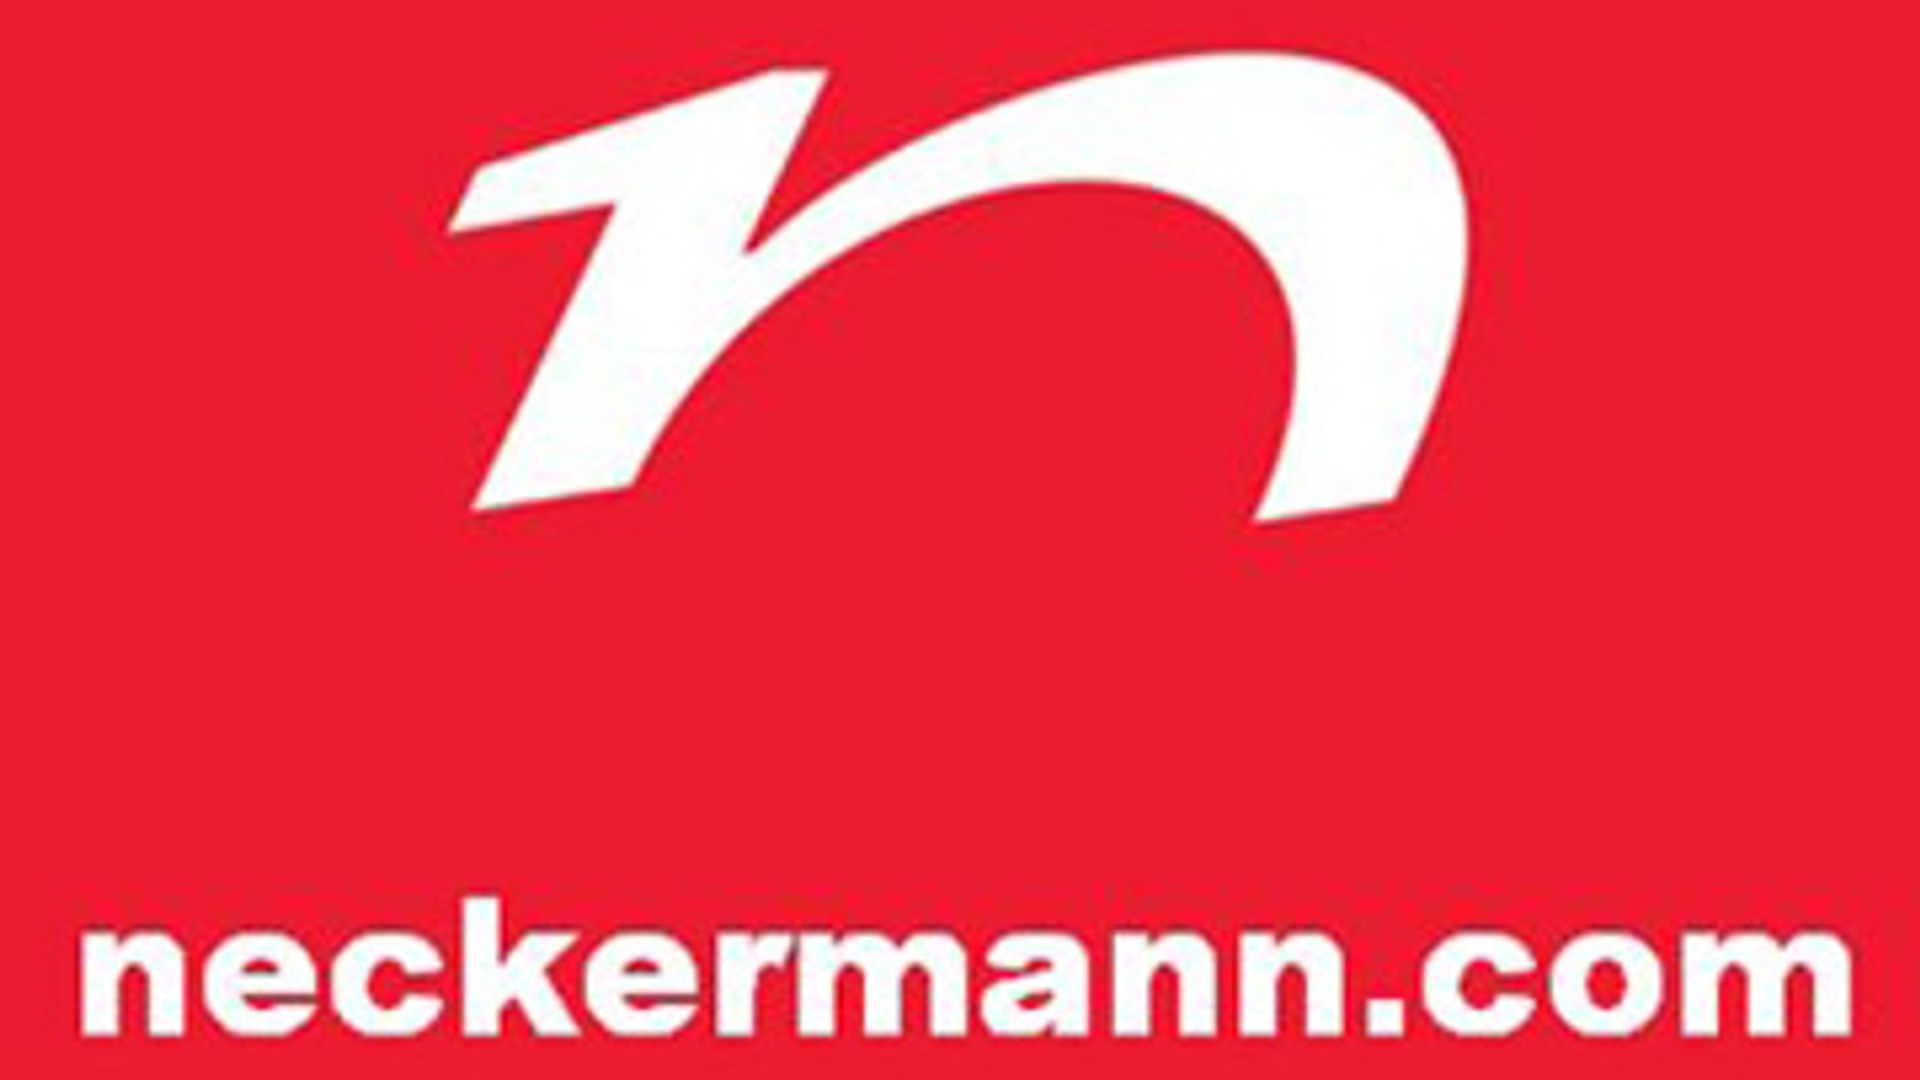 Neckermann_logo_360210.jpg